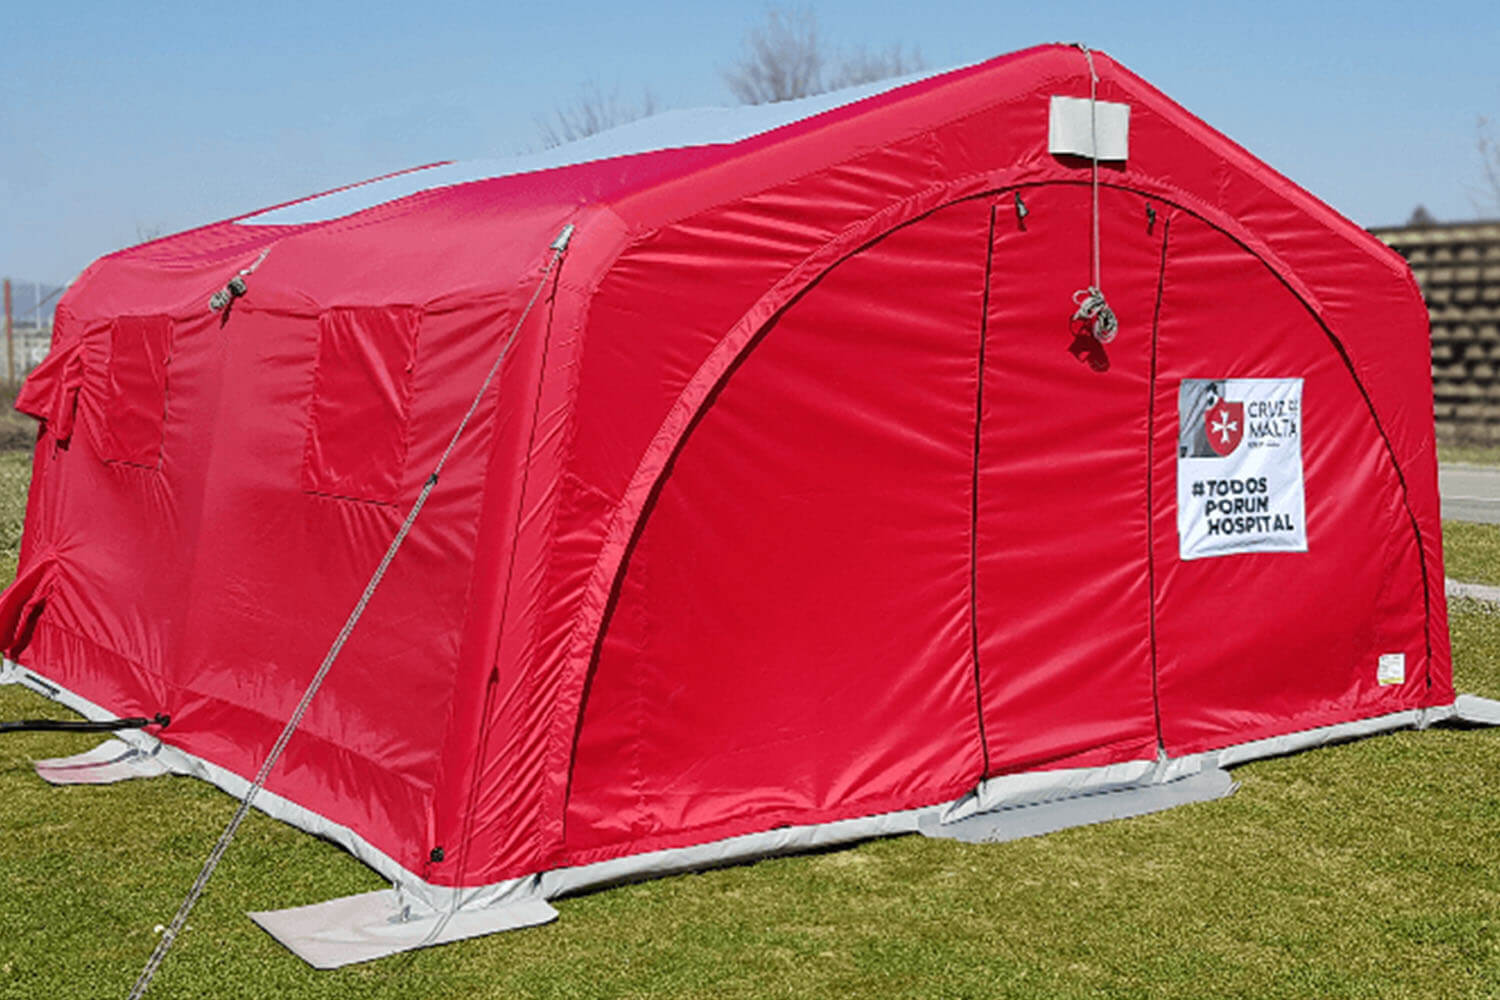 Inflatable medical tent Nixus PGK for Order of Malta